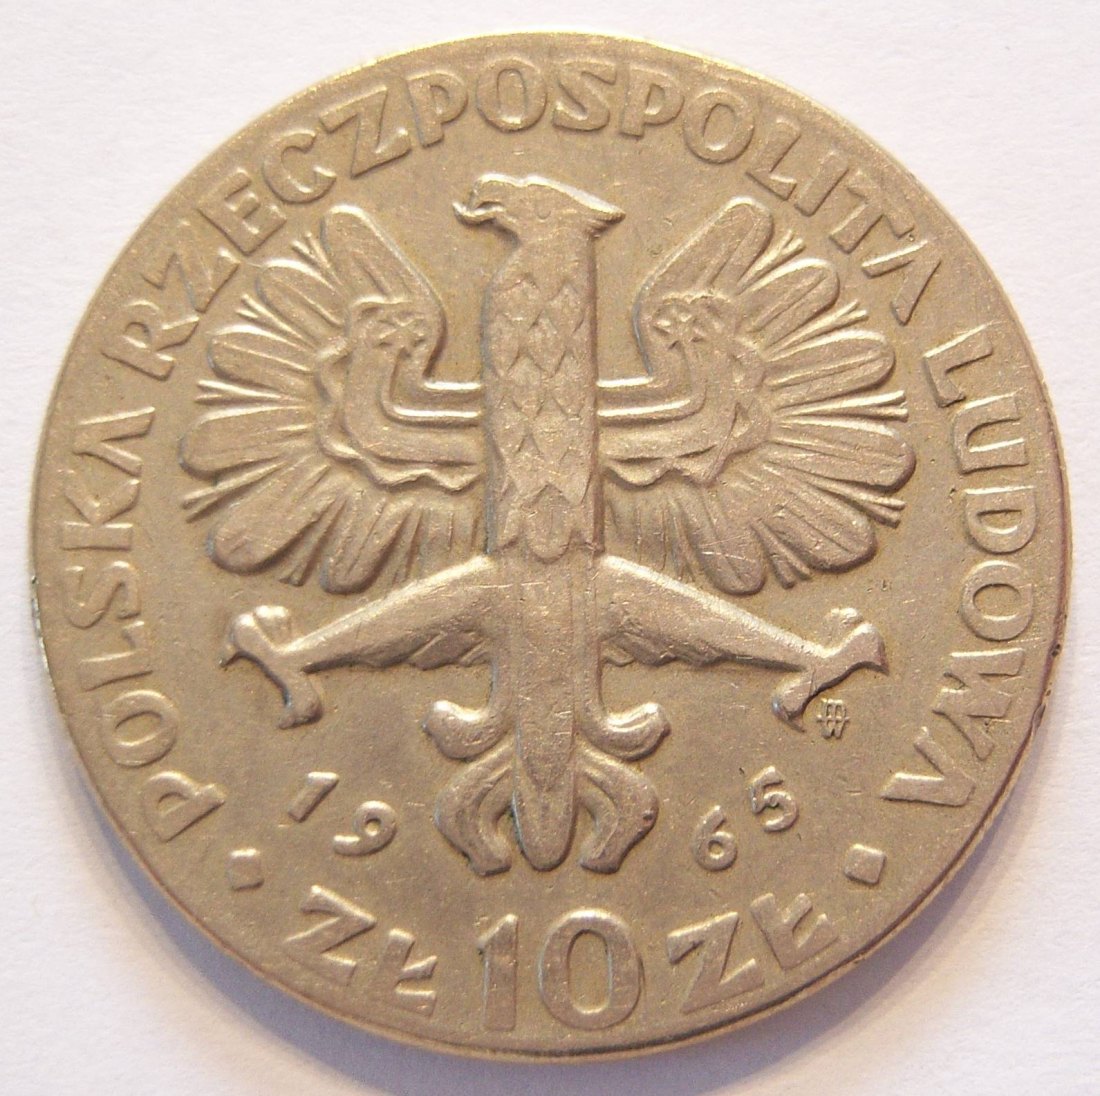  Polen 10 Zlotych 1965   